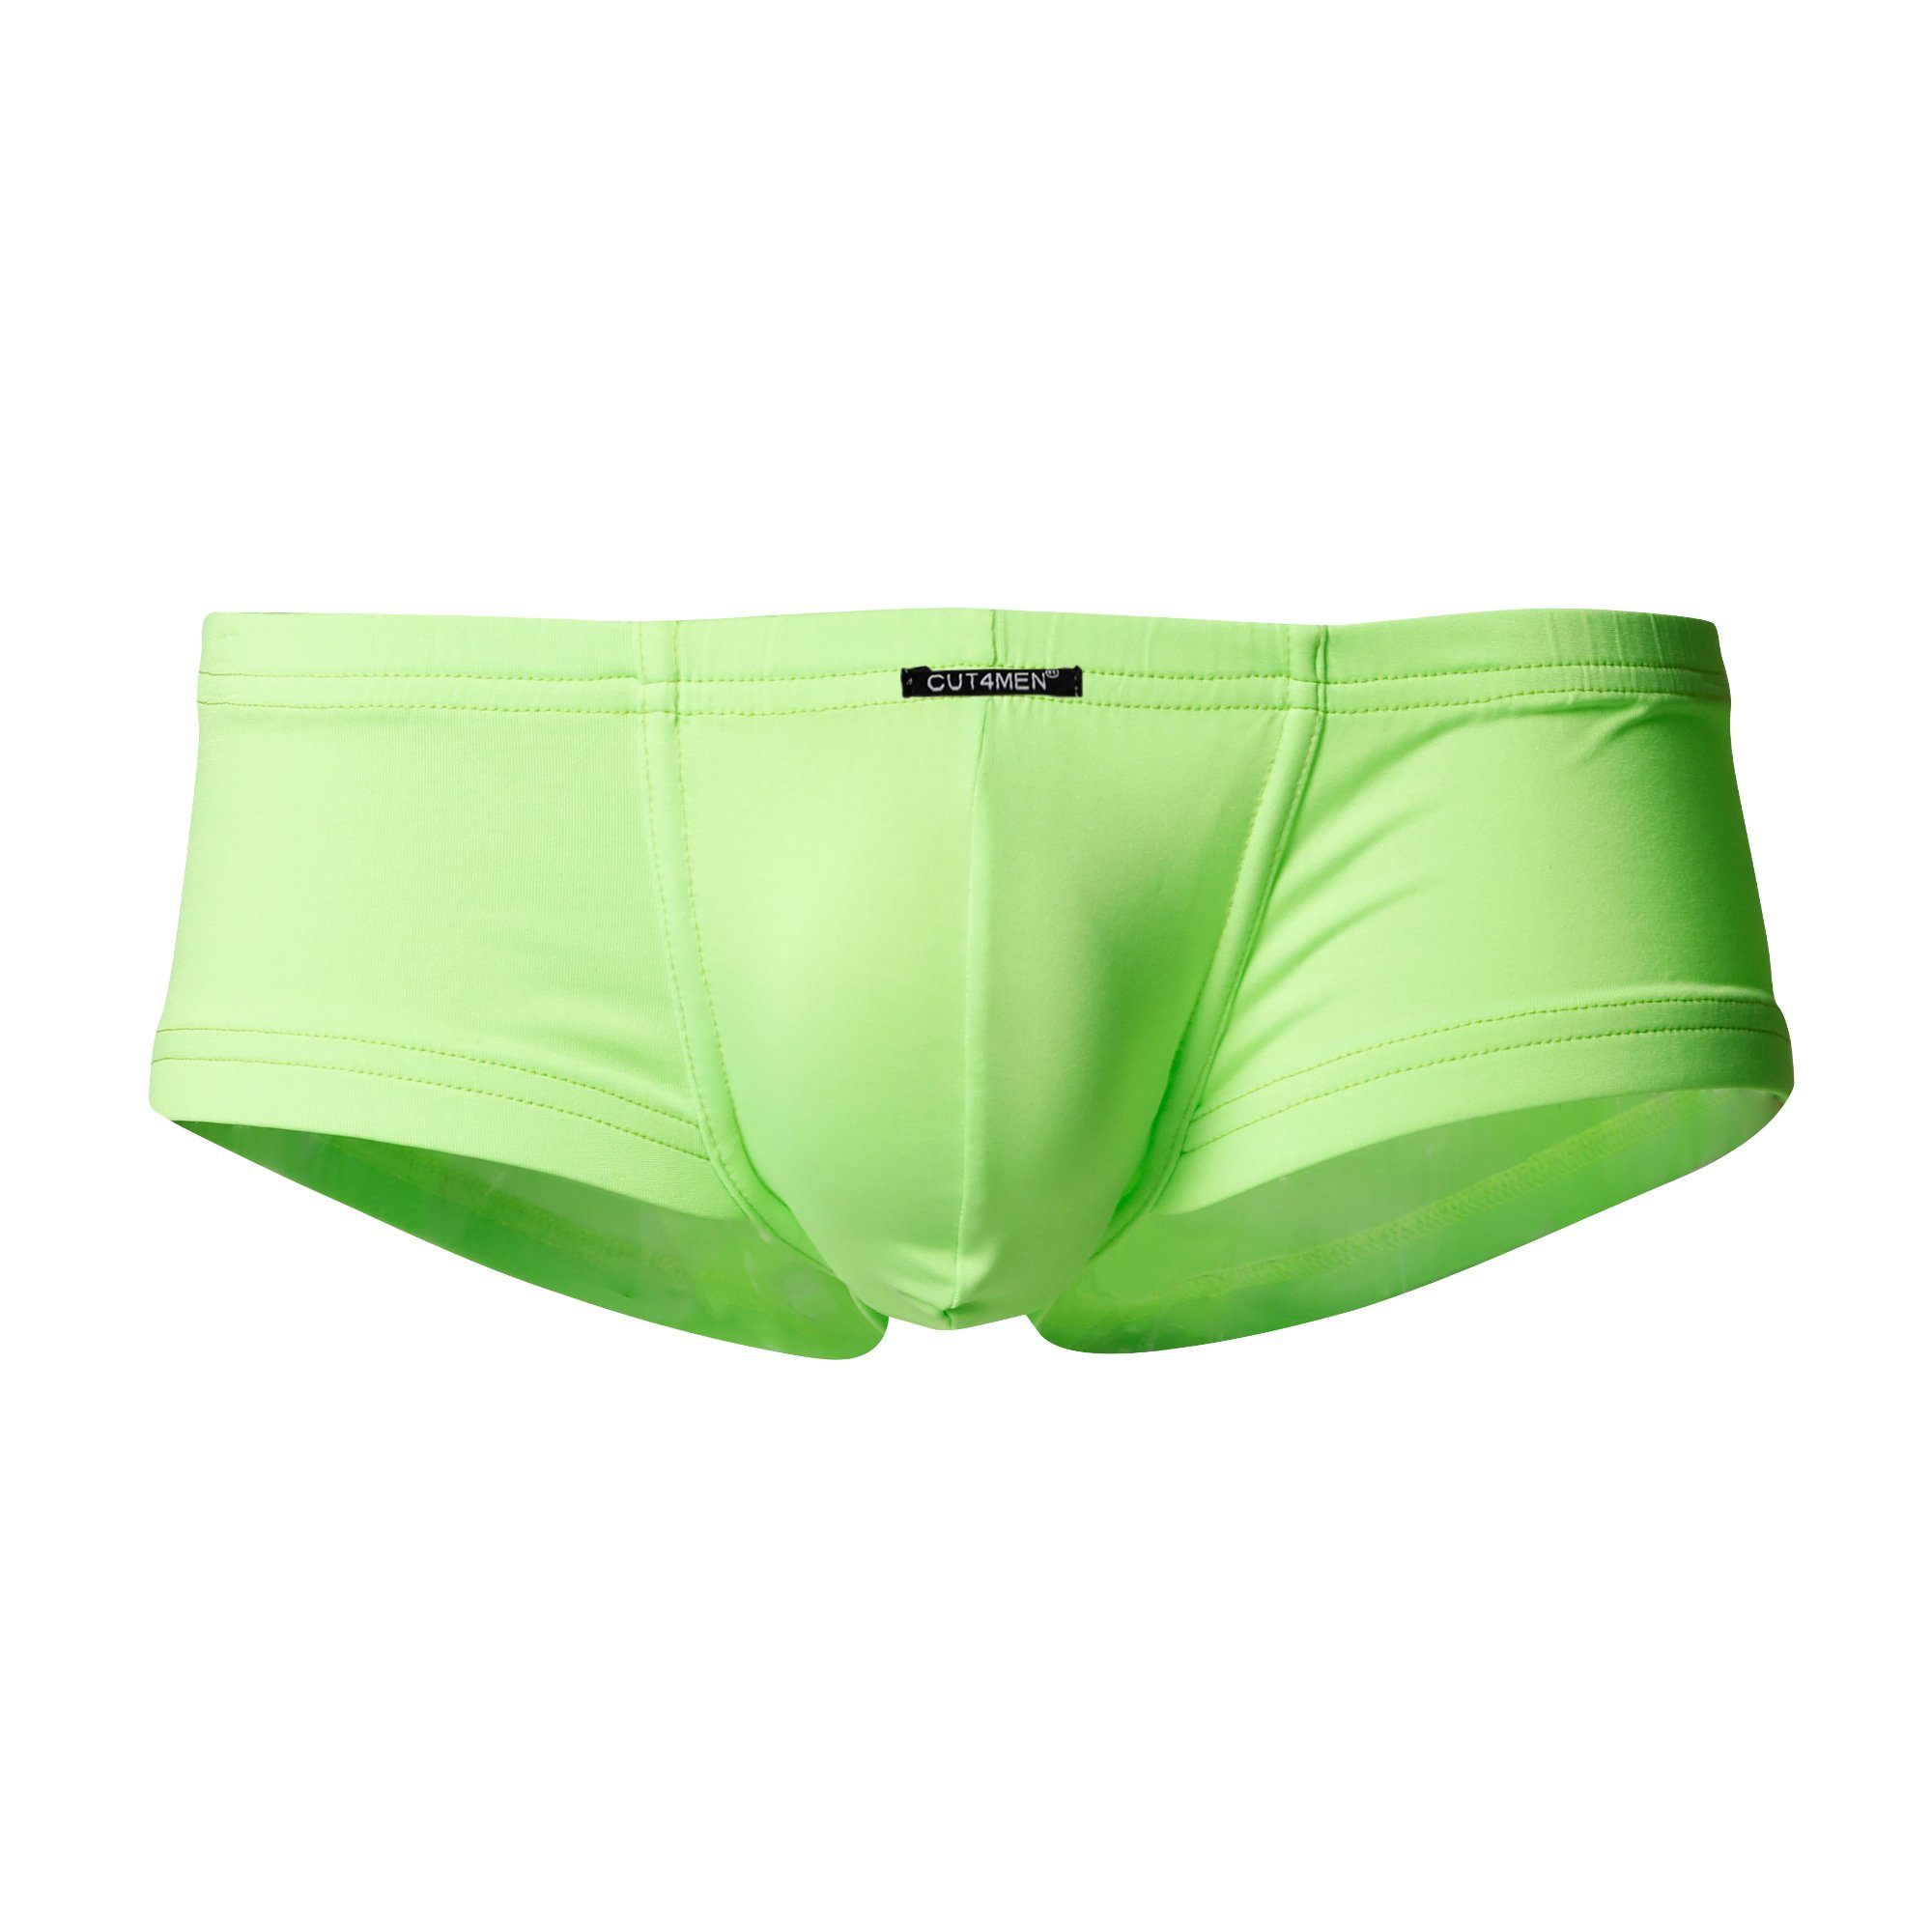 Shorts - NeonGreen XL Booty - CUT4MEN CUT4MEN S Pants Retro